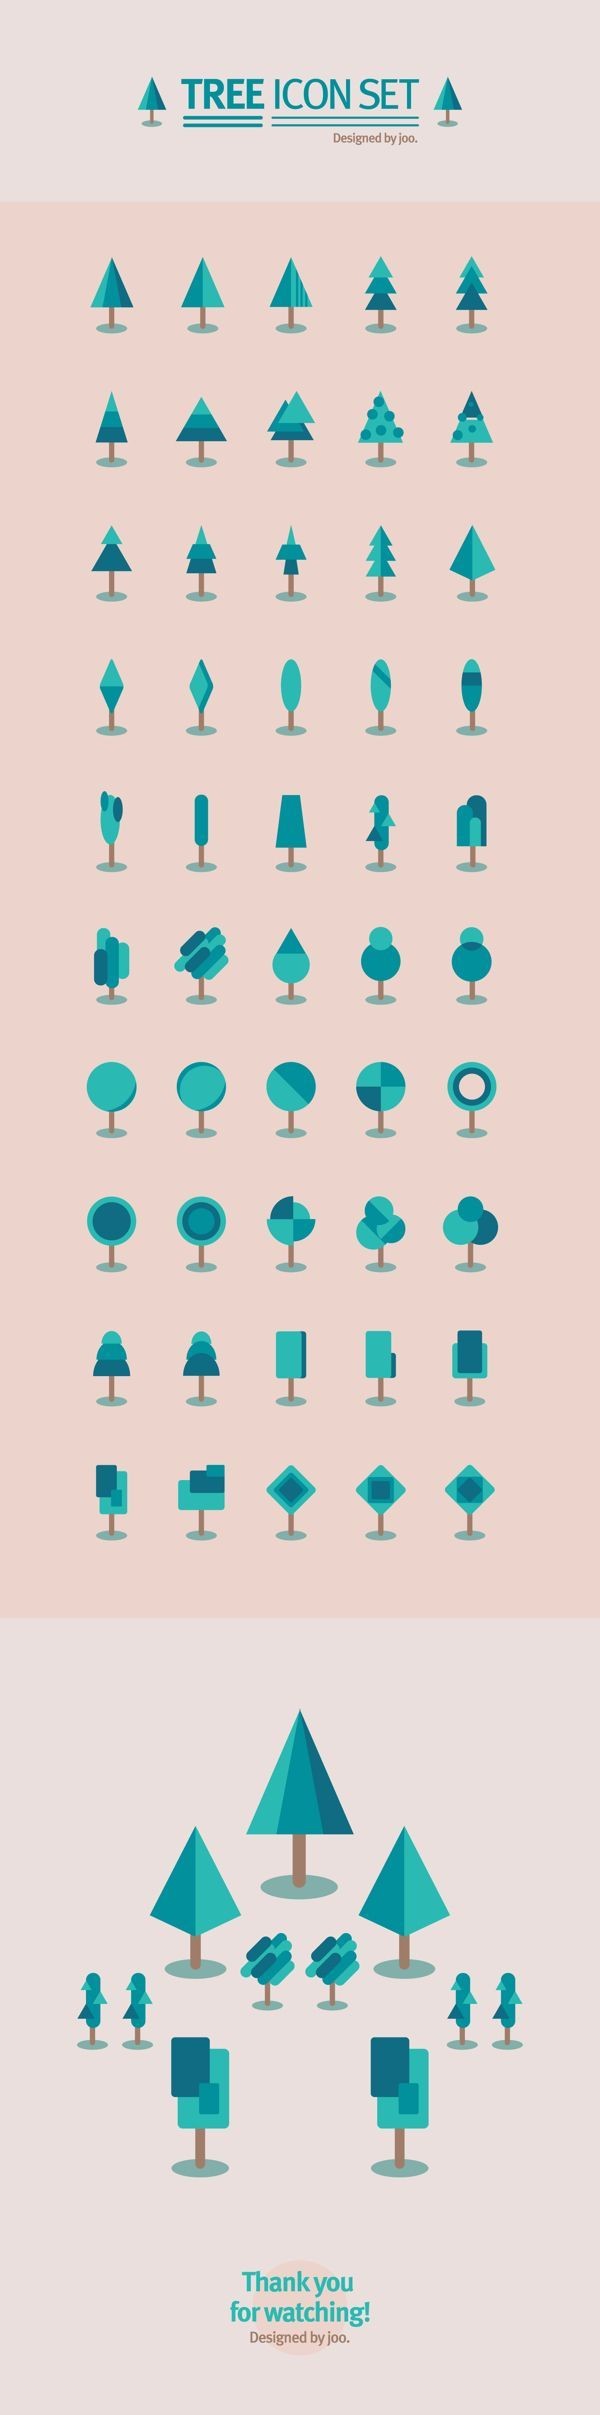 50 tree icon set by joo eunjeong, via Behance